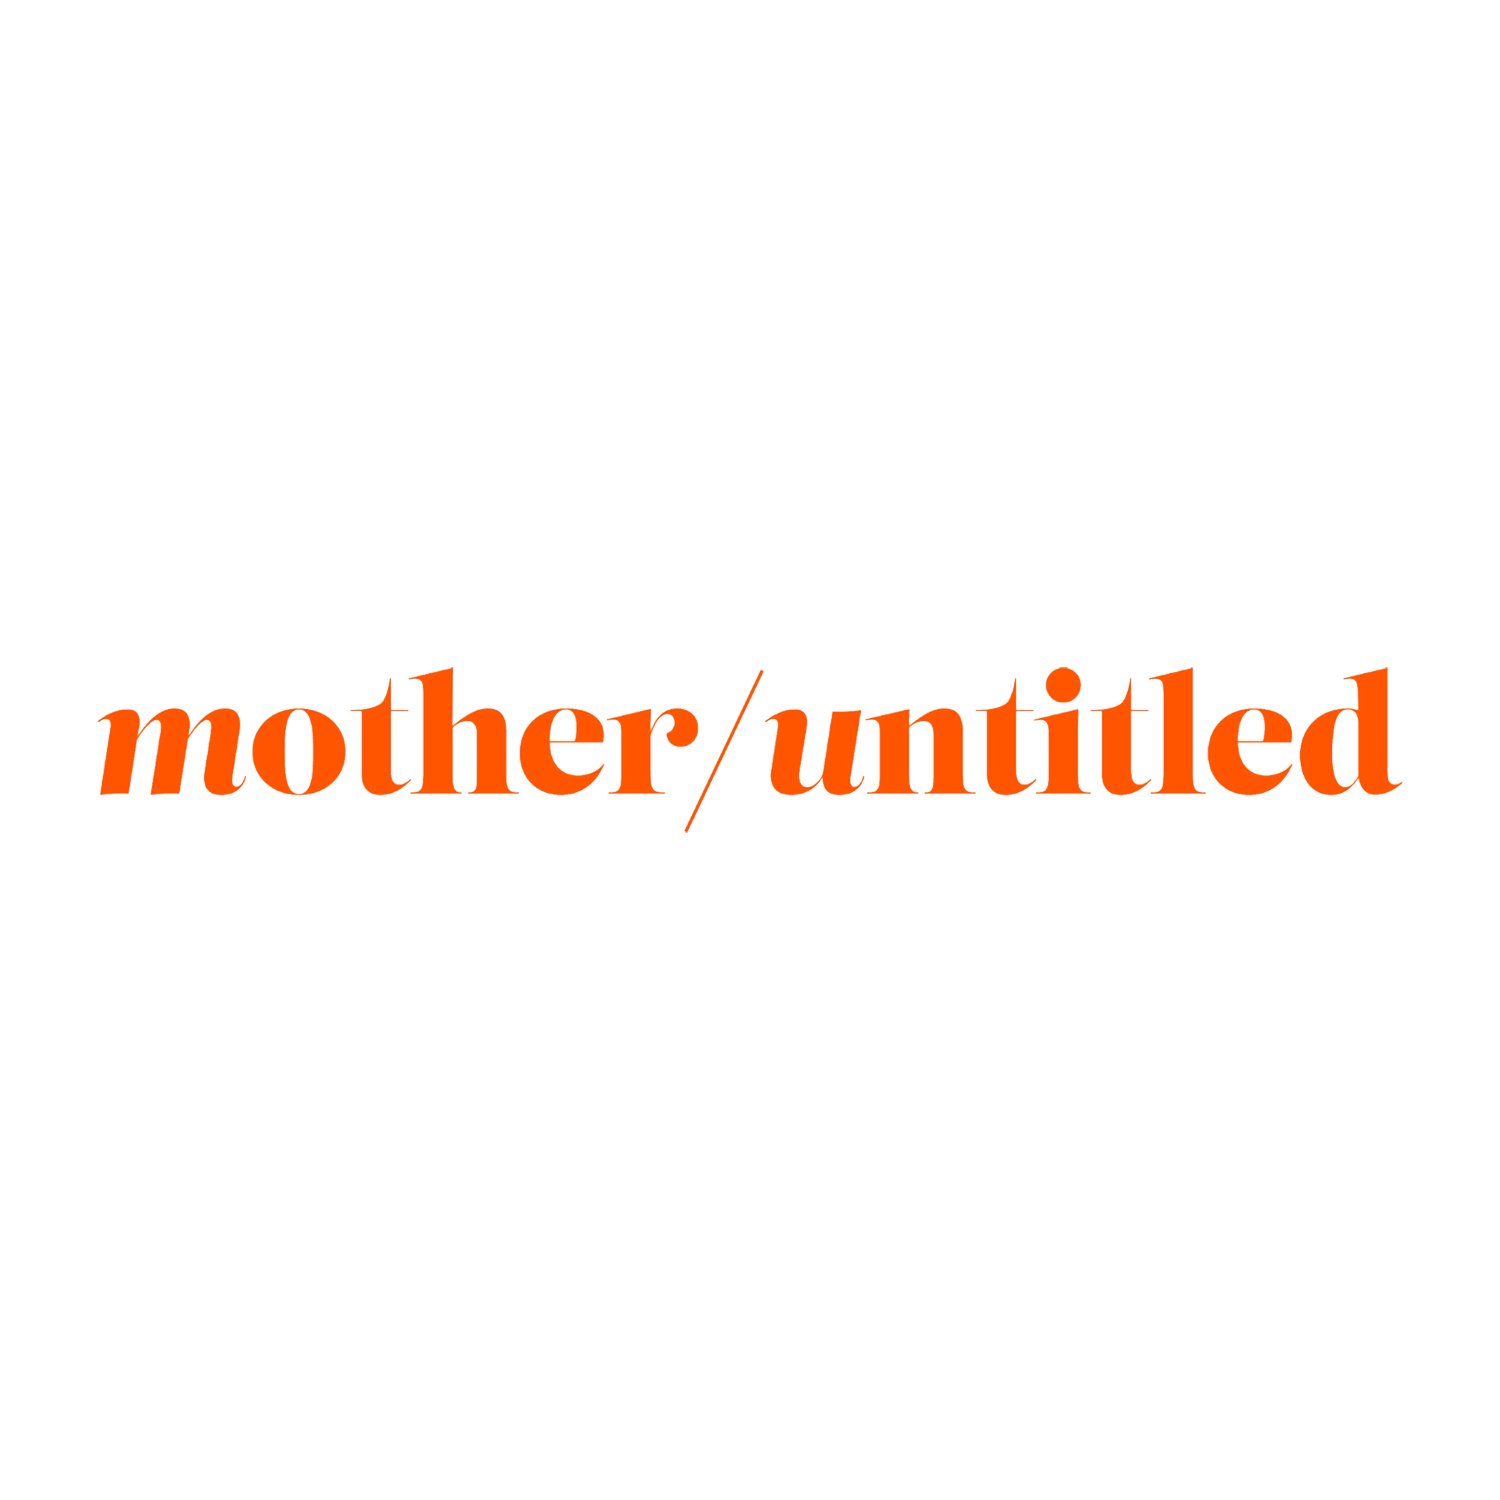 mother untitled logo.jpg